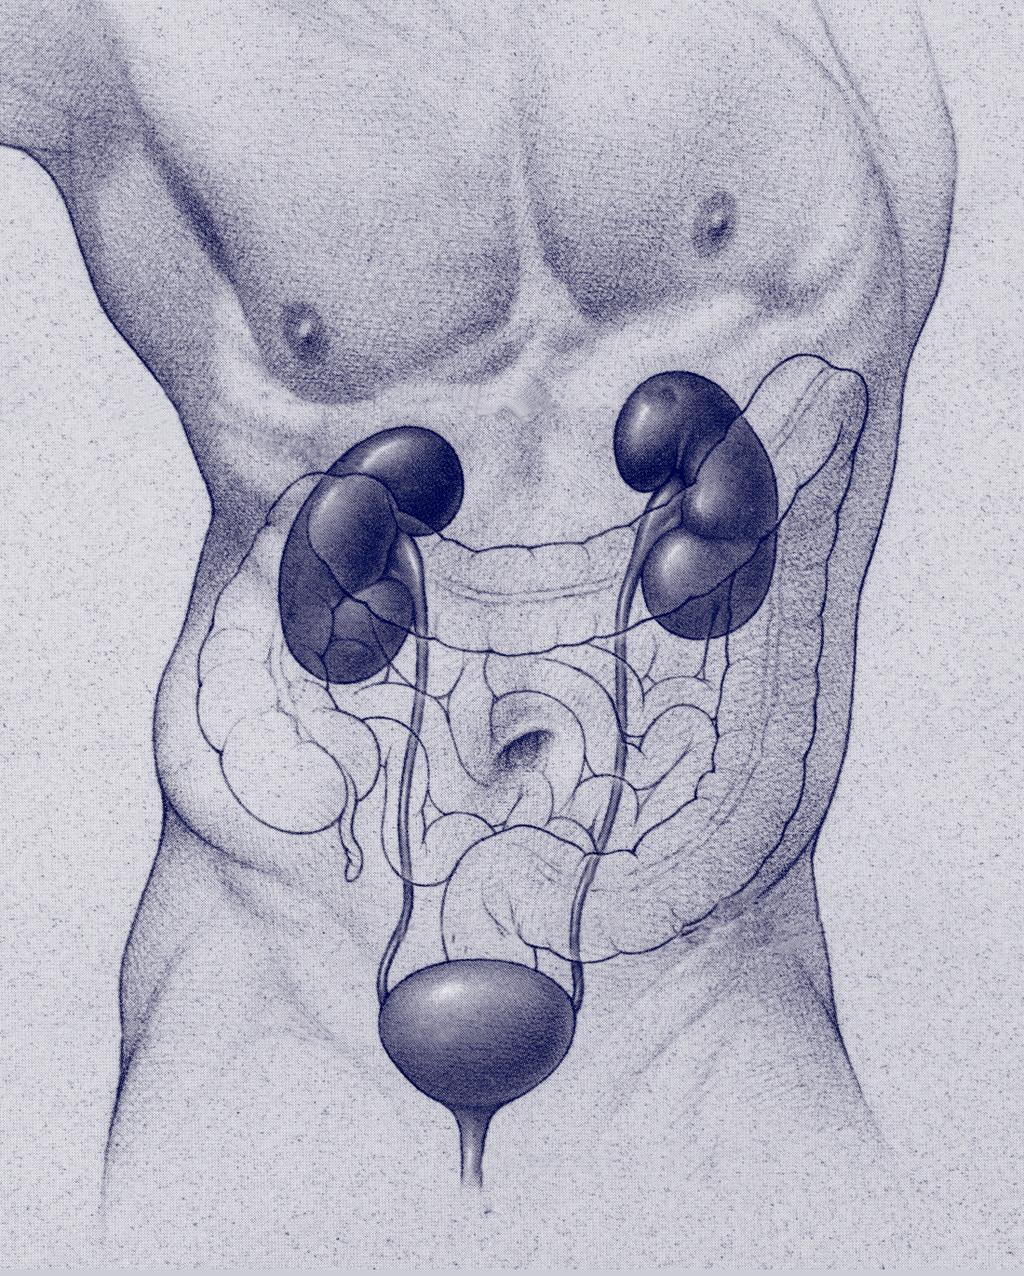 UROLOGIC L i m i t e d Radical Retropubic Prostatectomy A Guide for Patients Rotorua Michael D. Cresswell F.R.A.C.S (Urol) Tauranga Mark R. Fraundorfer F.R.A.C.S (Urol) Peter J. Gilling F.R.A.C.S (Urol) Andre M.